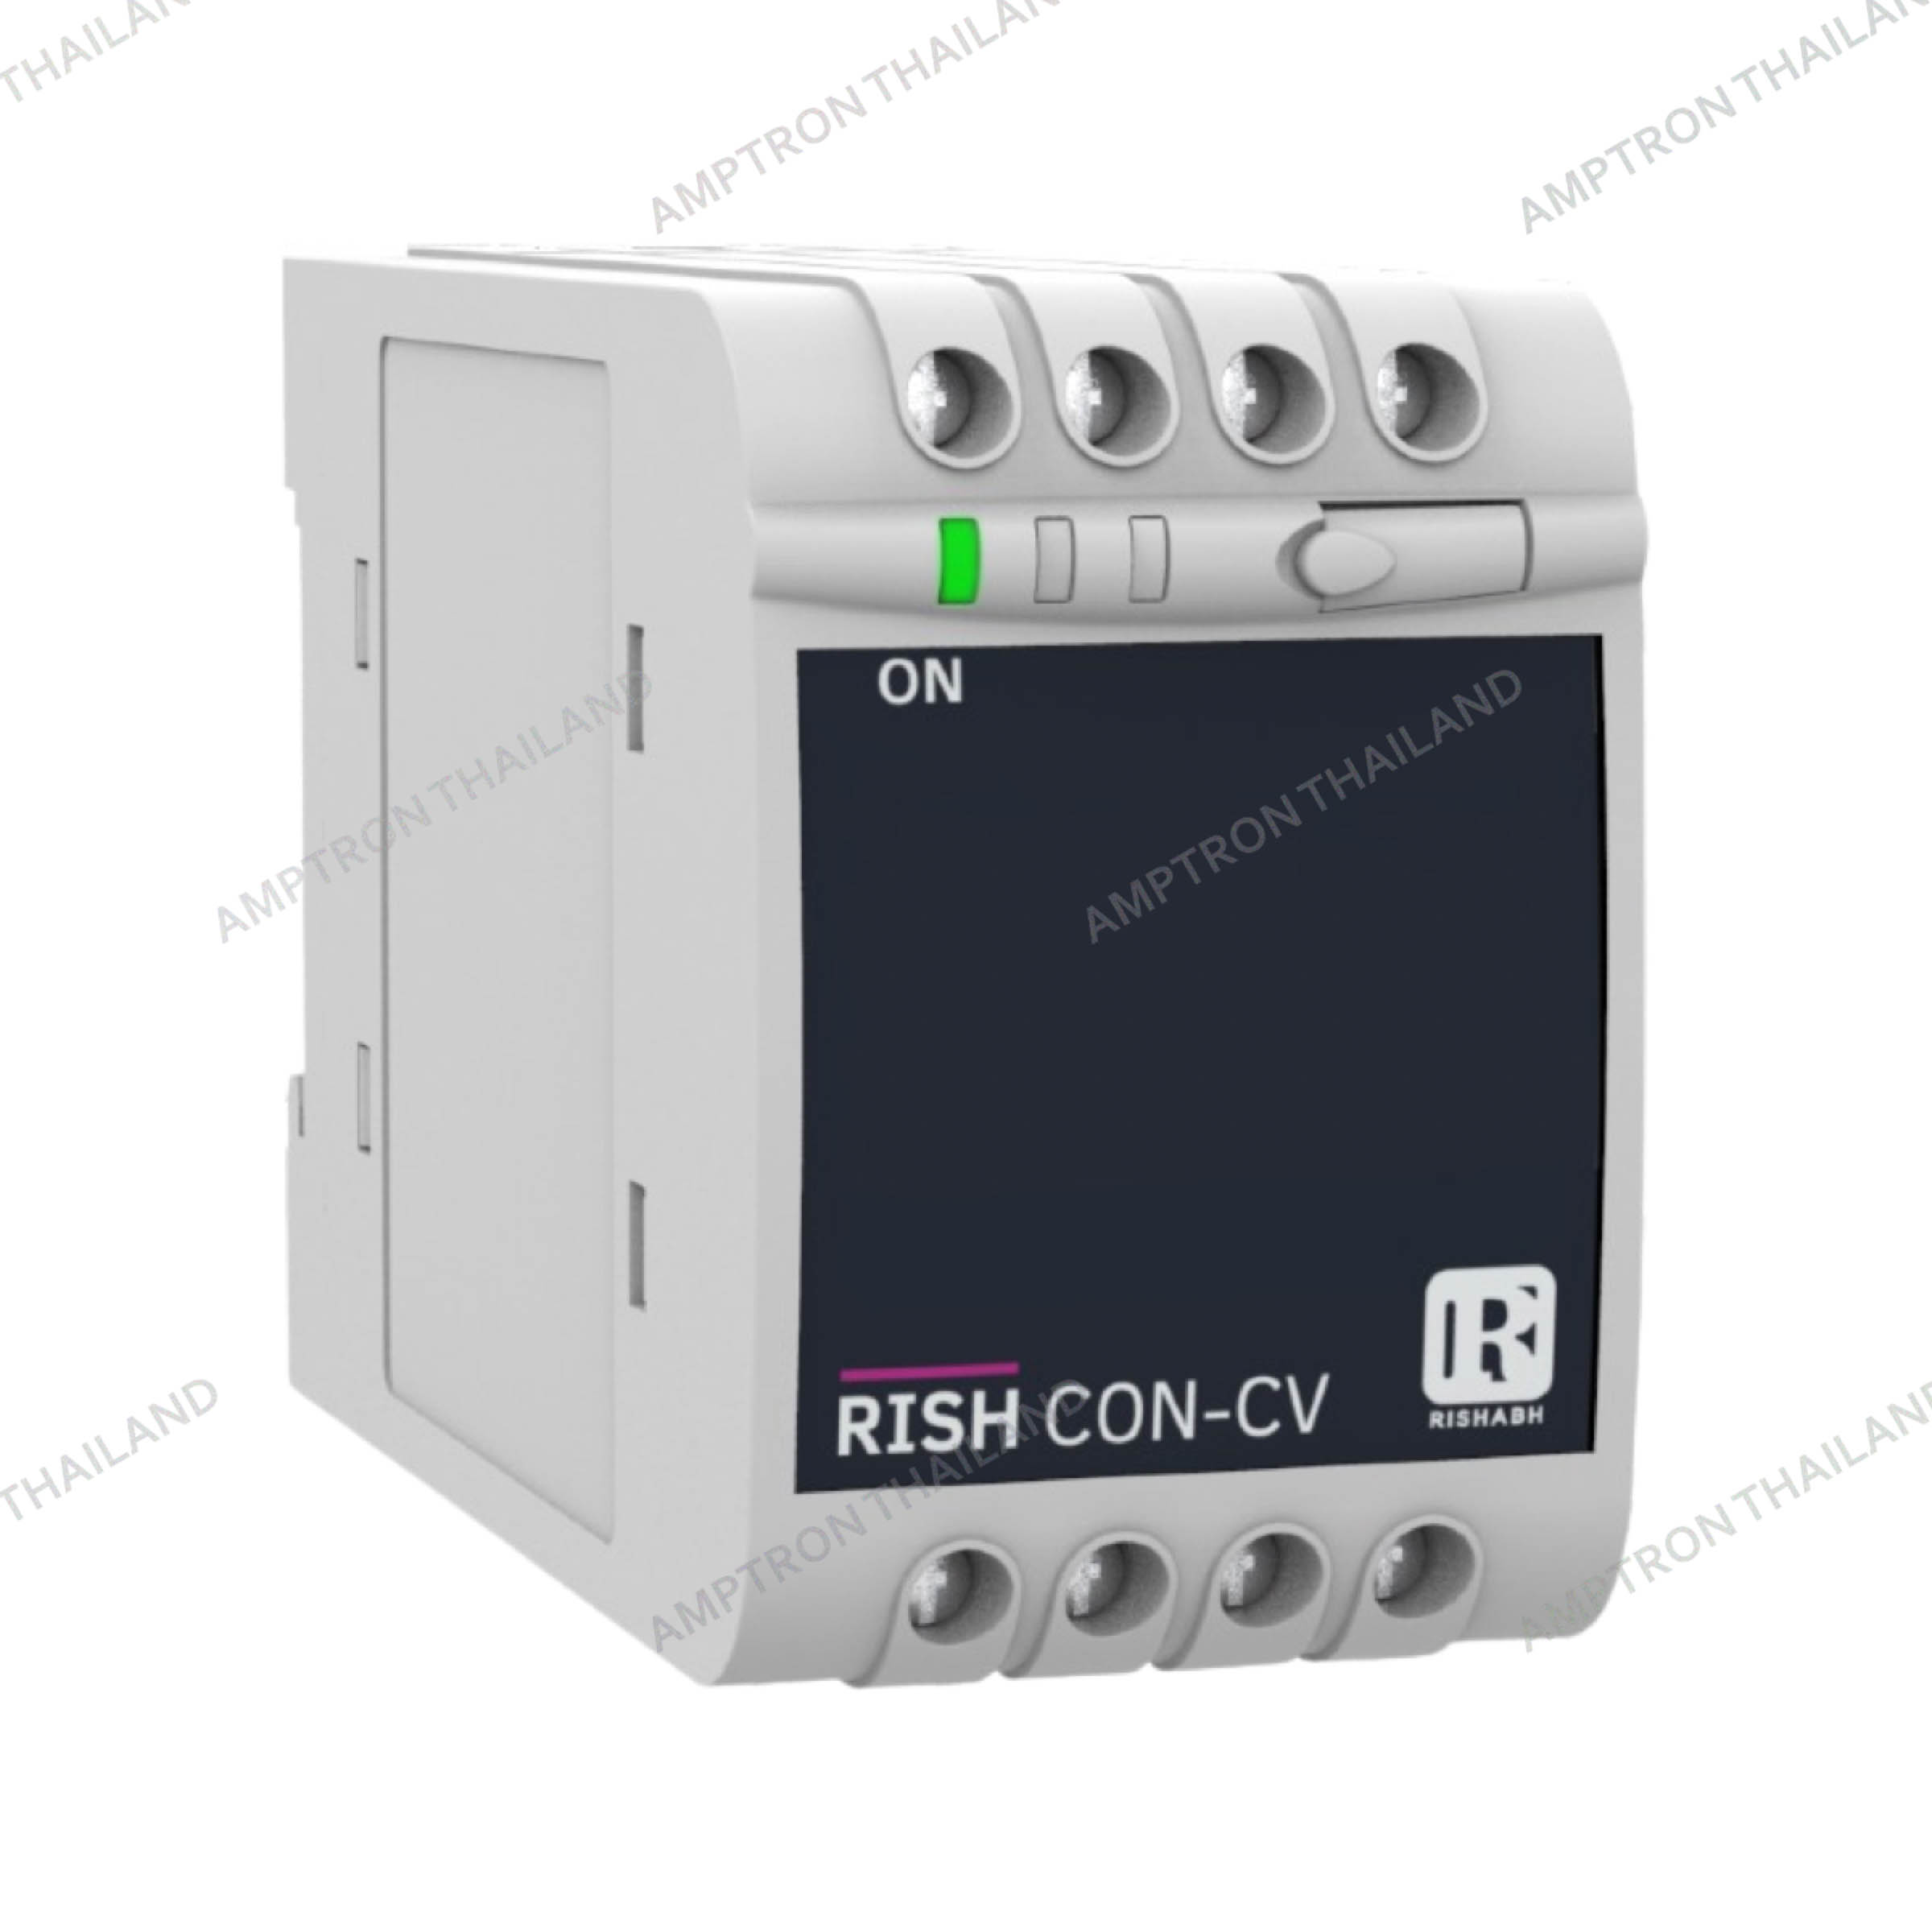 Rish CON-CA/CV Dual Output Transducer